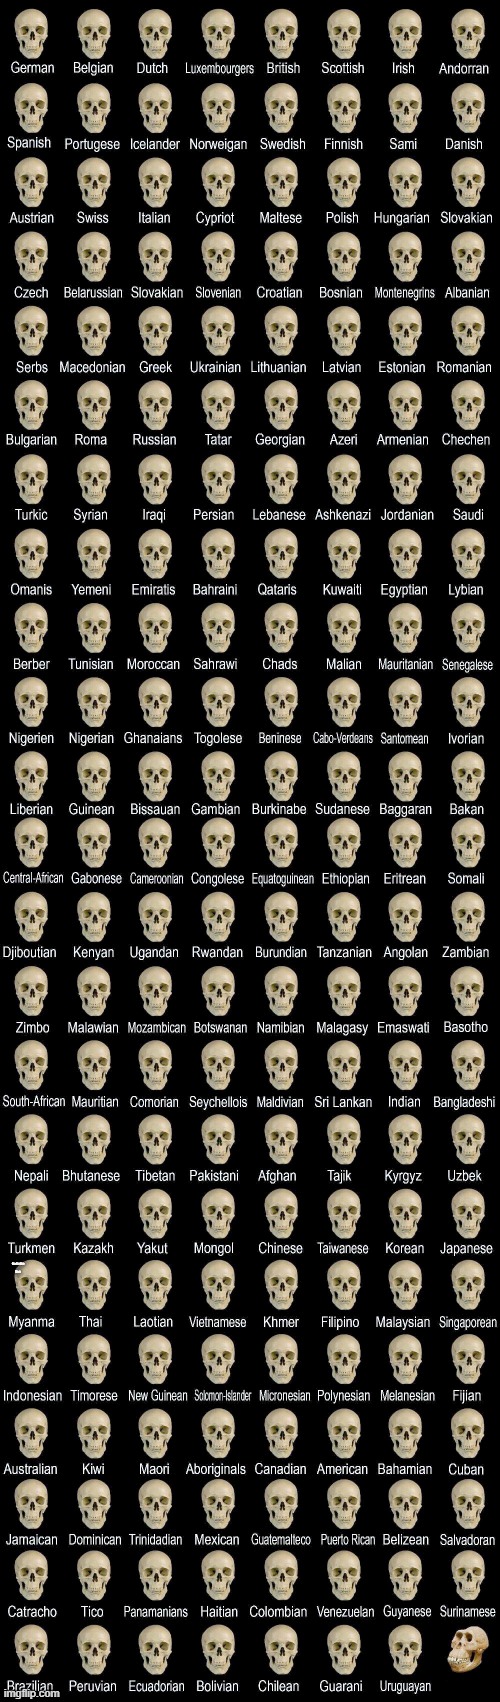 Deformed skull | fortnite fan | image tagged in deformed skull | made w/ Imgflip meme maker